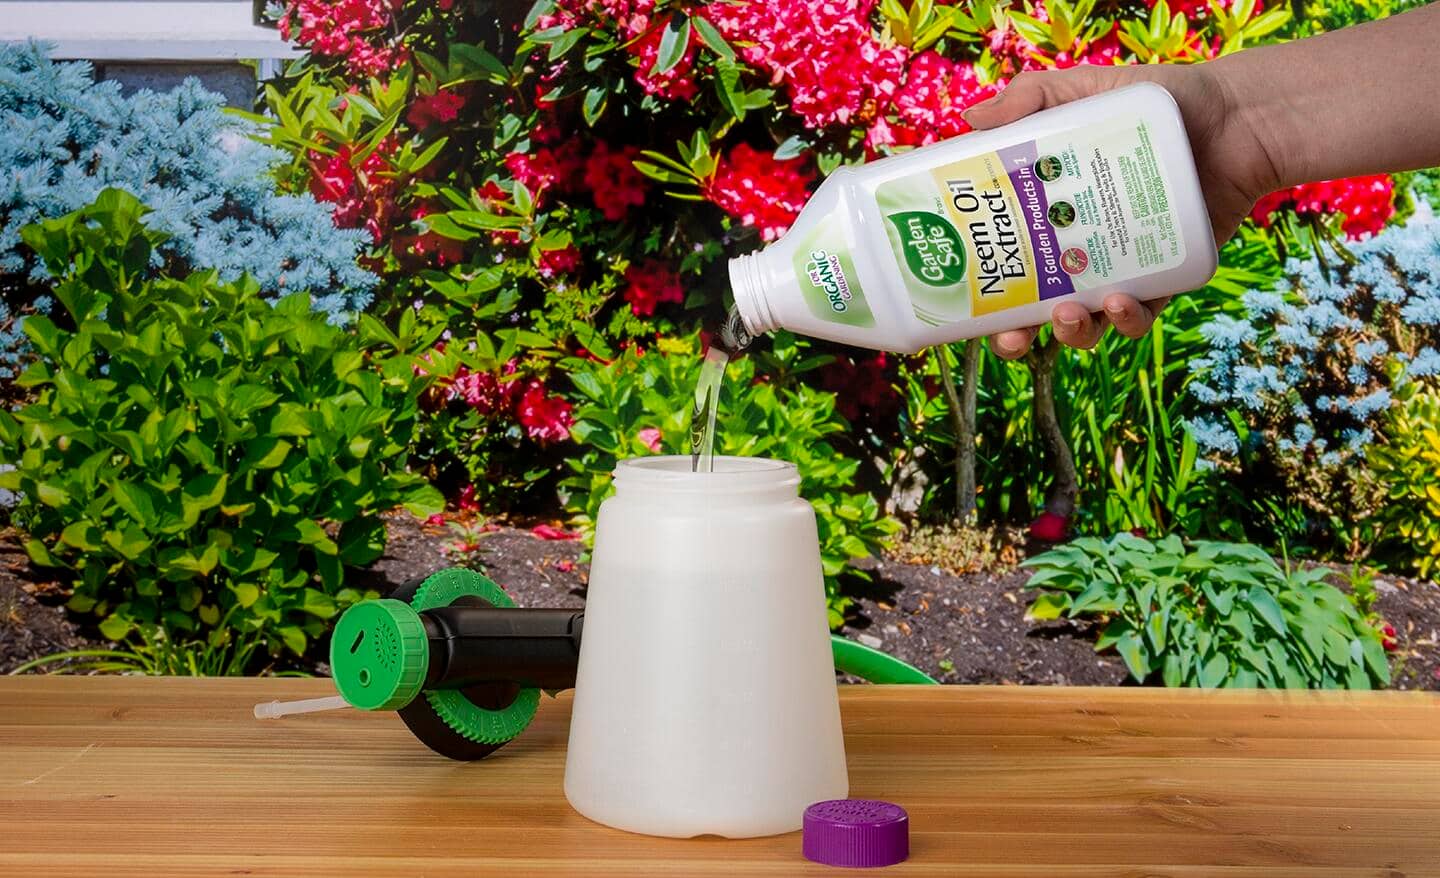 Gardener pours chemicals into a sprayer